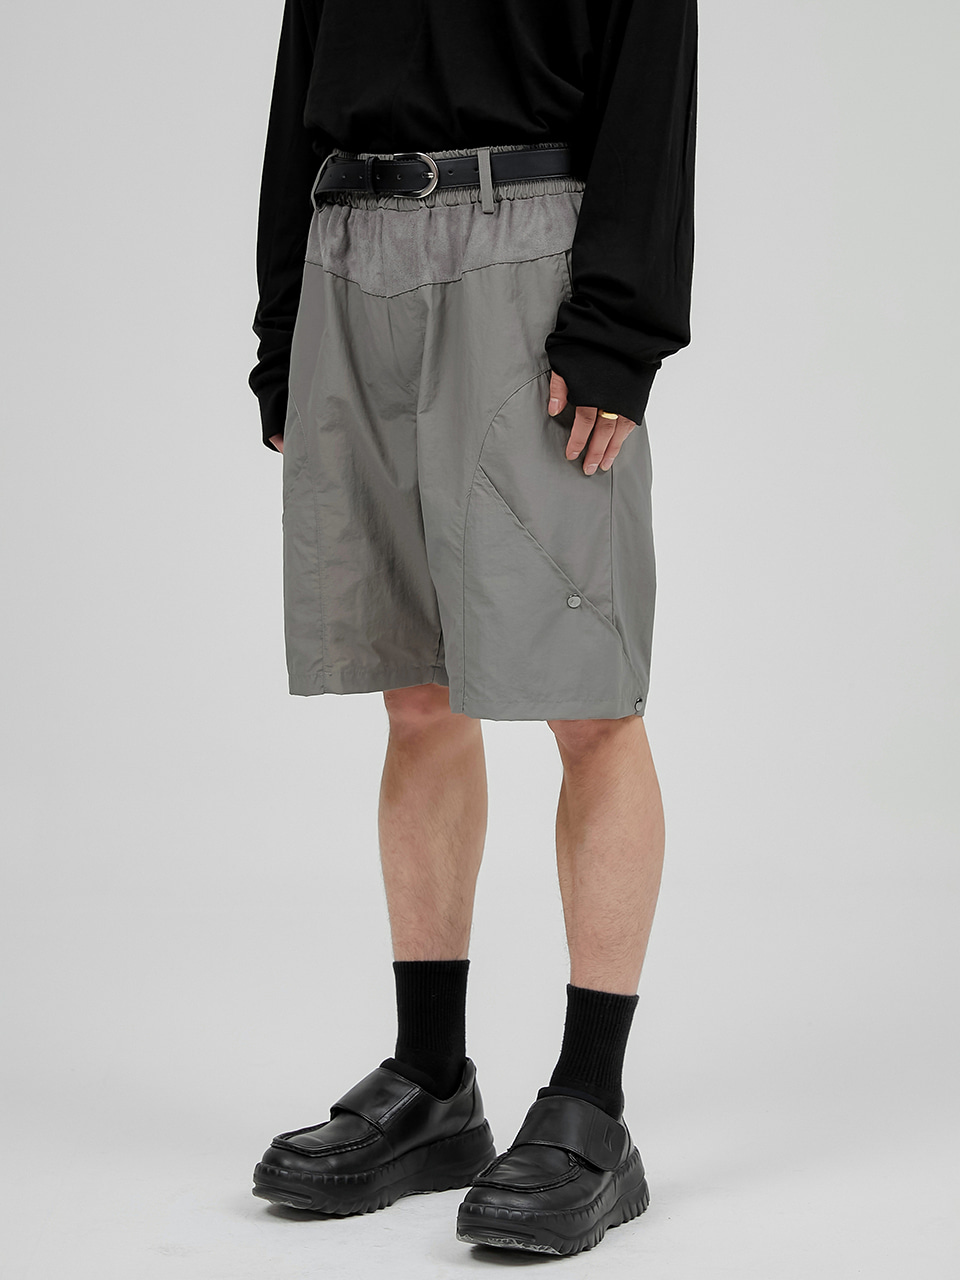 FLARE UP플레어업 Side Flap shorts - Dark Gray (FL-223)